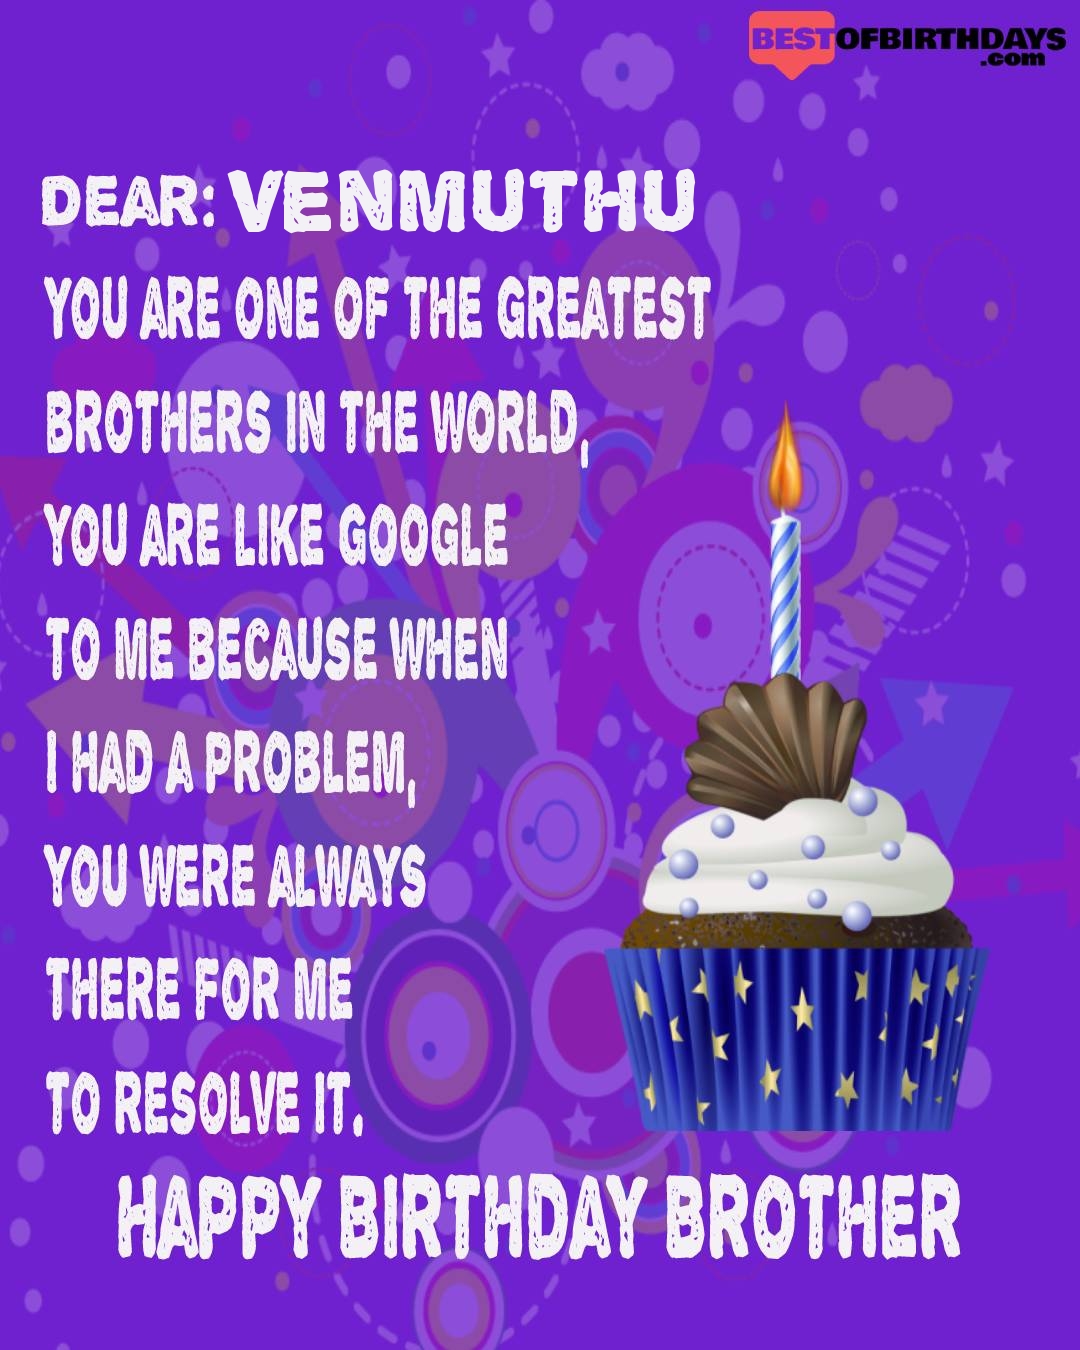 Happy birthday venmuthu bhai brother bro